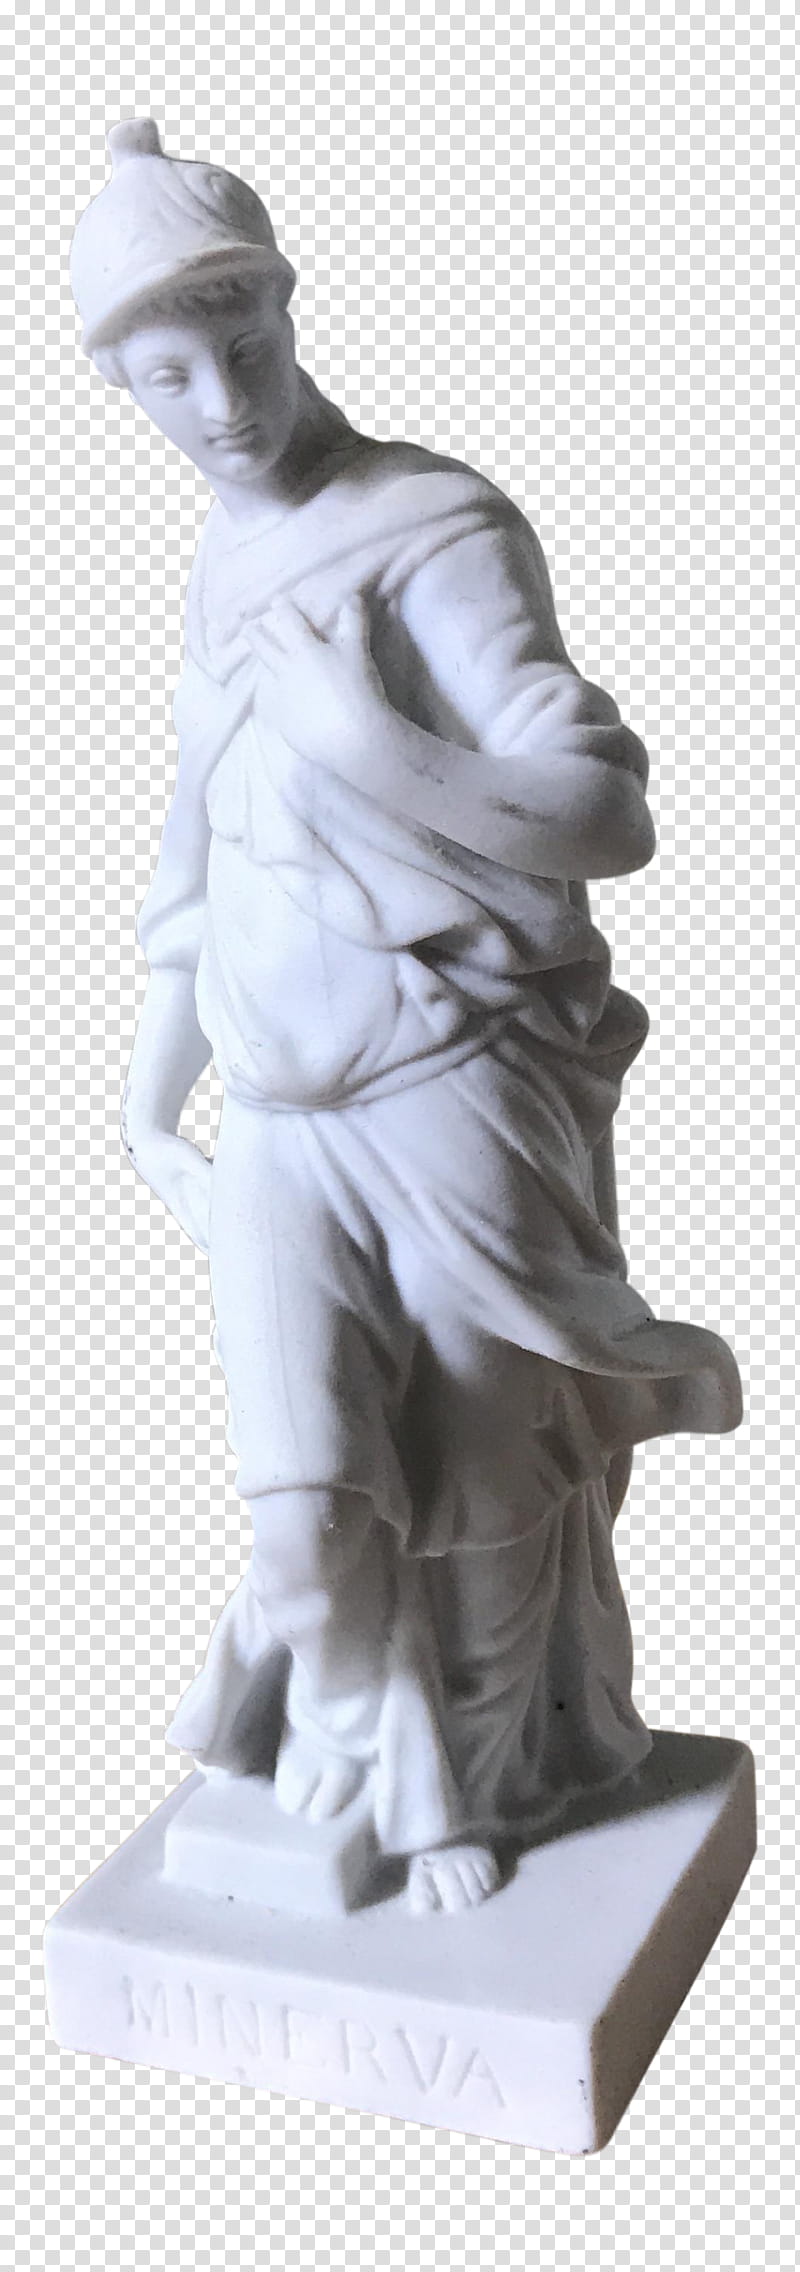 Statue Statue, Sculpture, Classical Sculpture, Figurine, Stone Carving, Minerva, Drawing, Porcelain transparent background PNG clipart